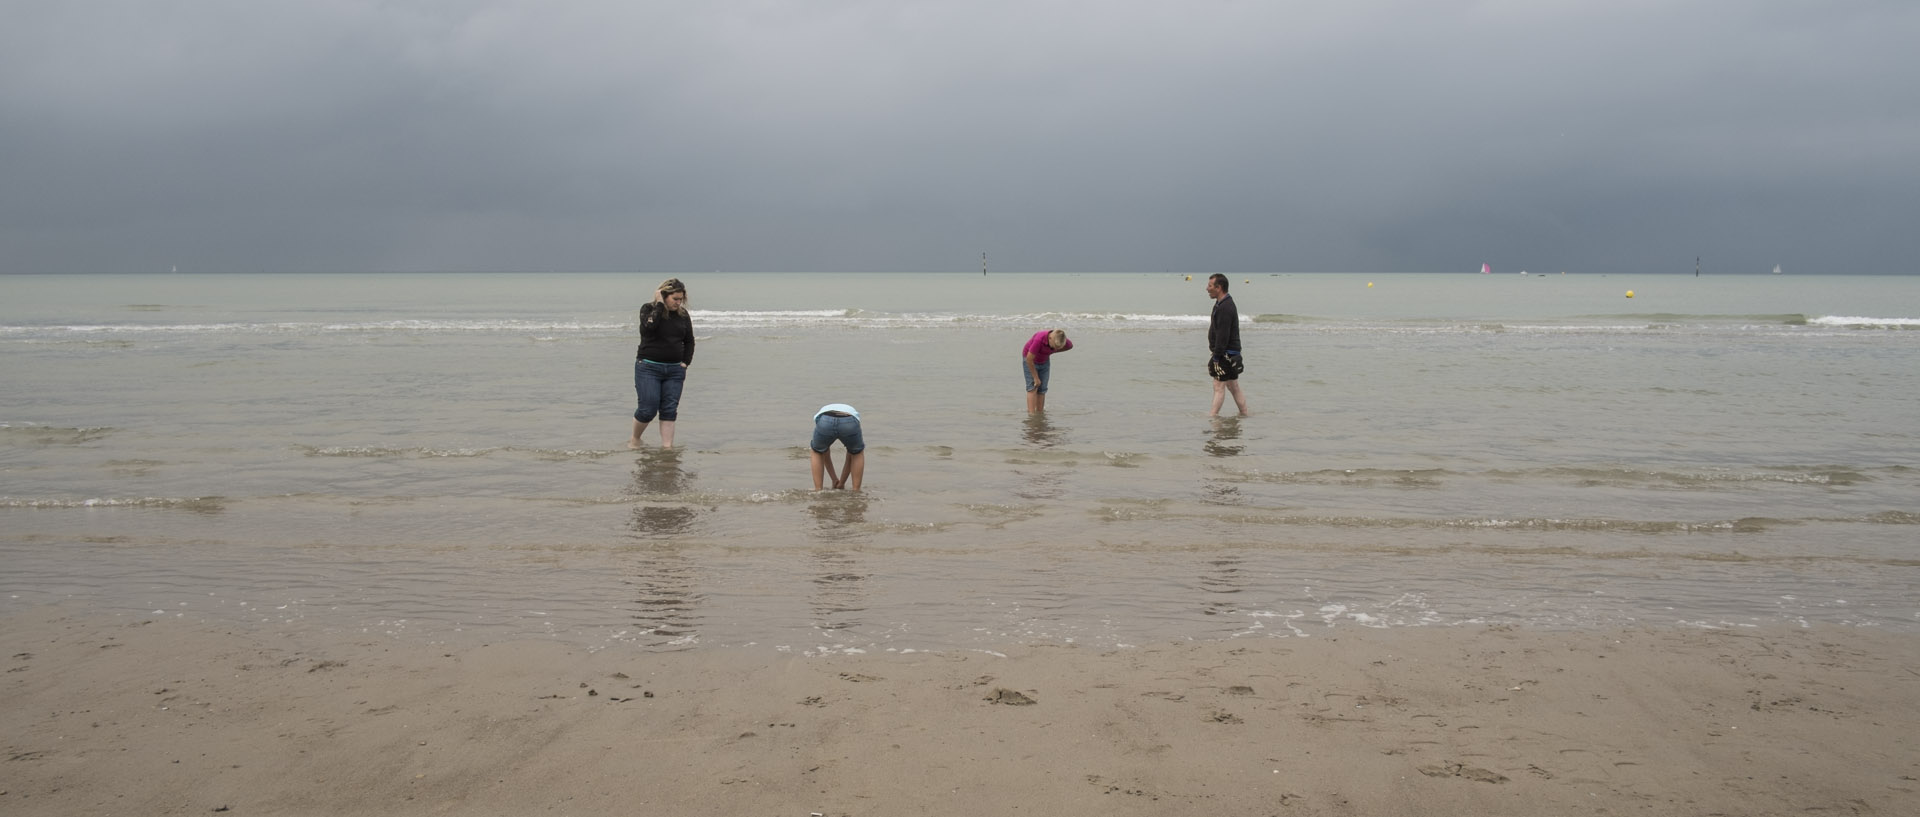 Jeudi 20 août 2015, 15:34, Malo les bains, Dunkerque